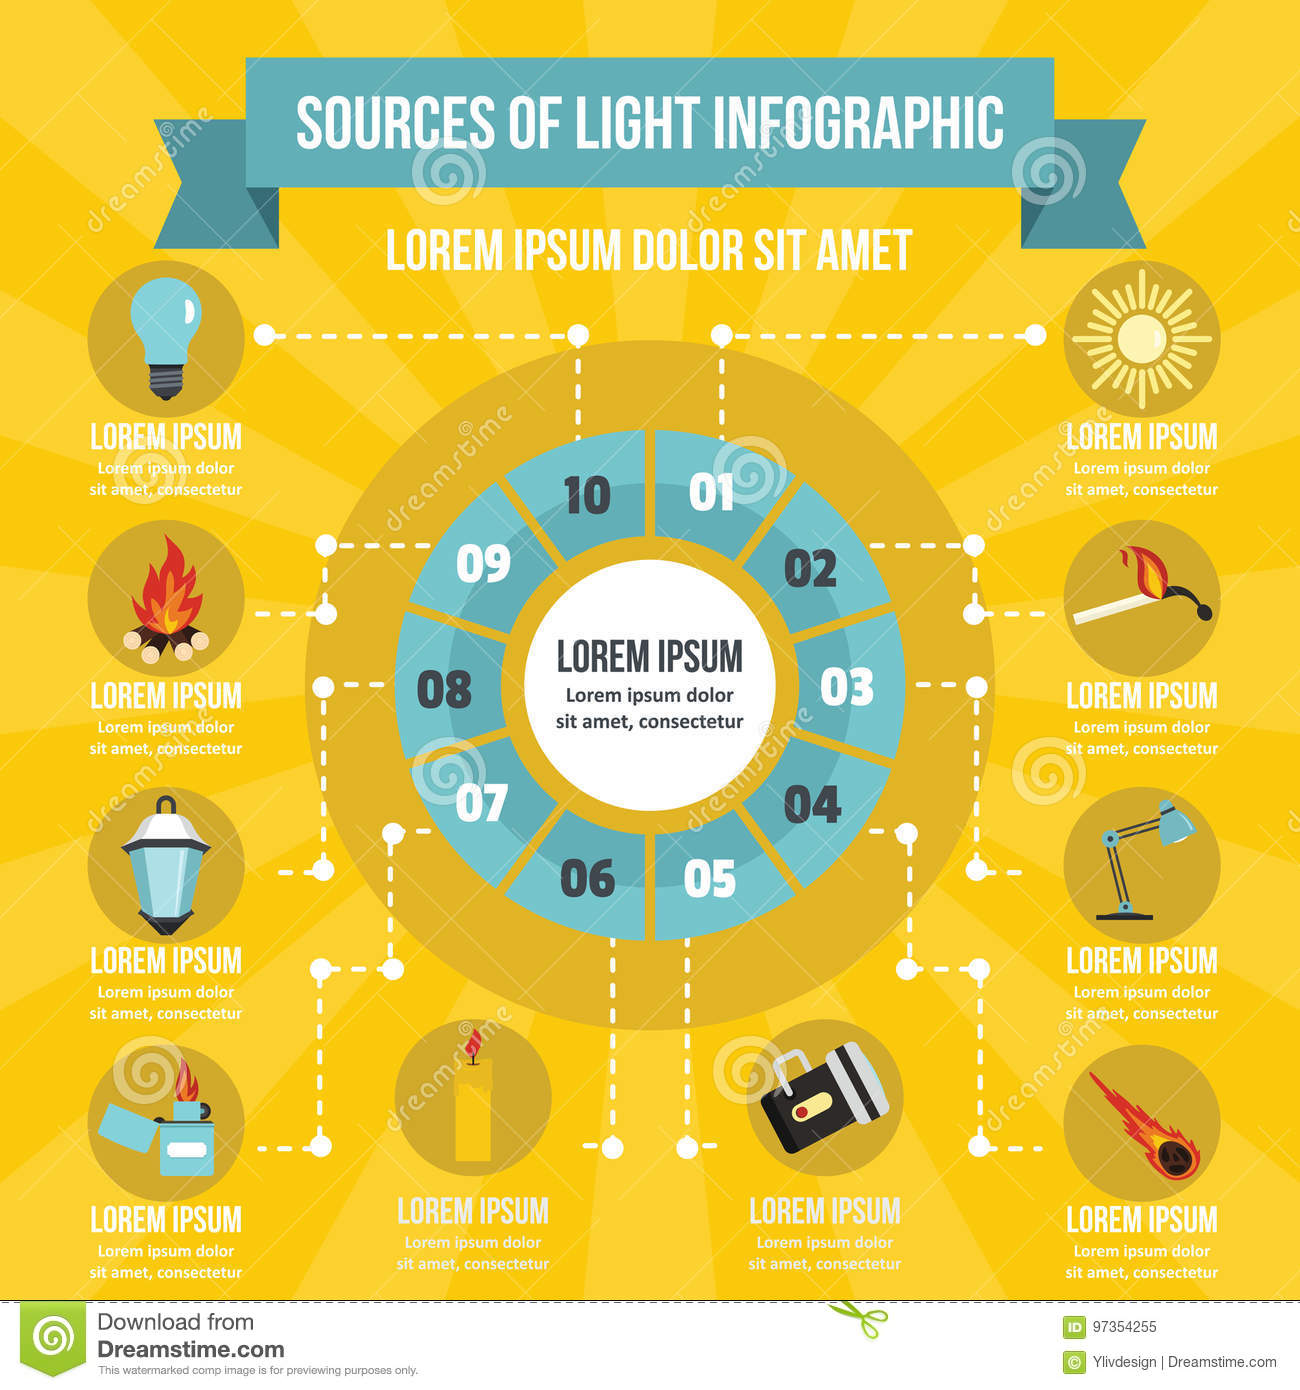 Lightbulb Infographics Template ~ Presentation Templates on Creative Market